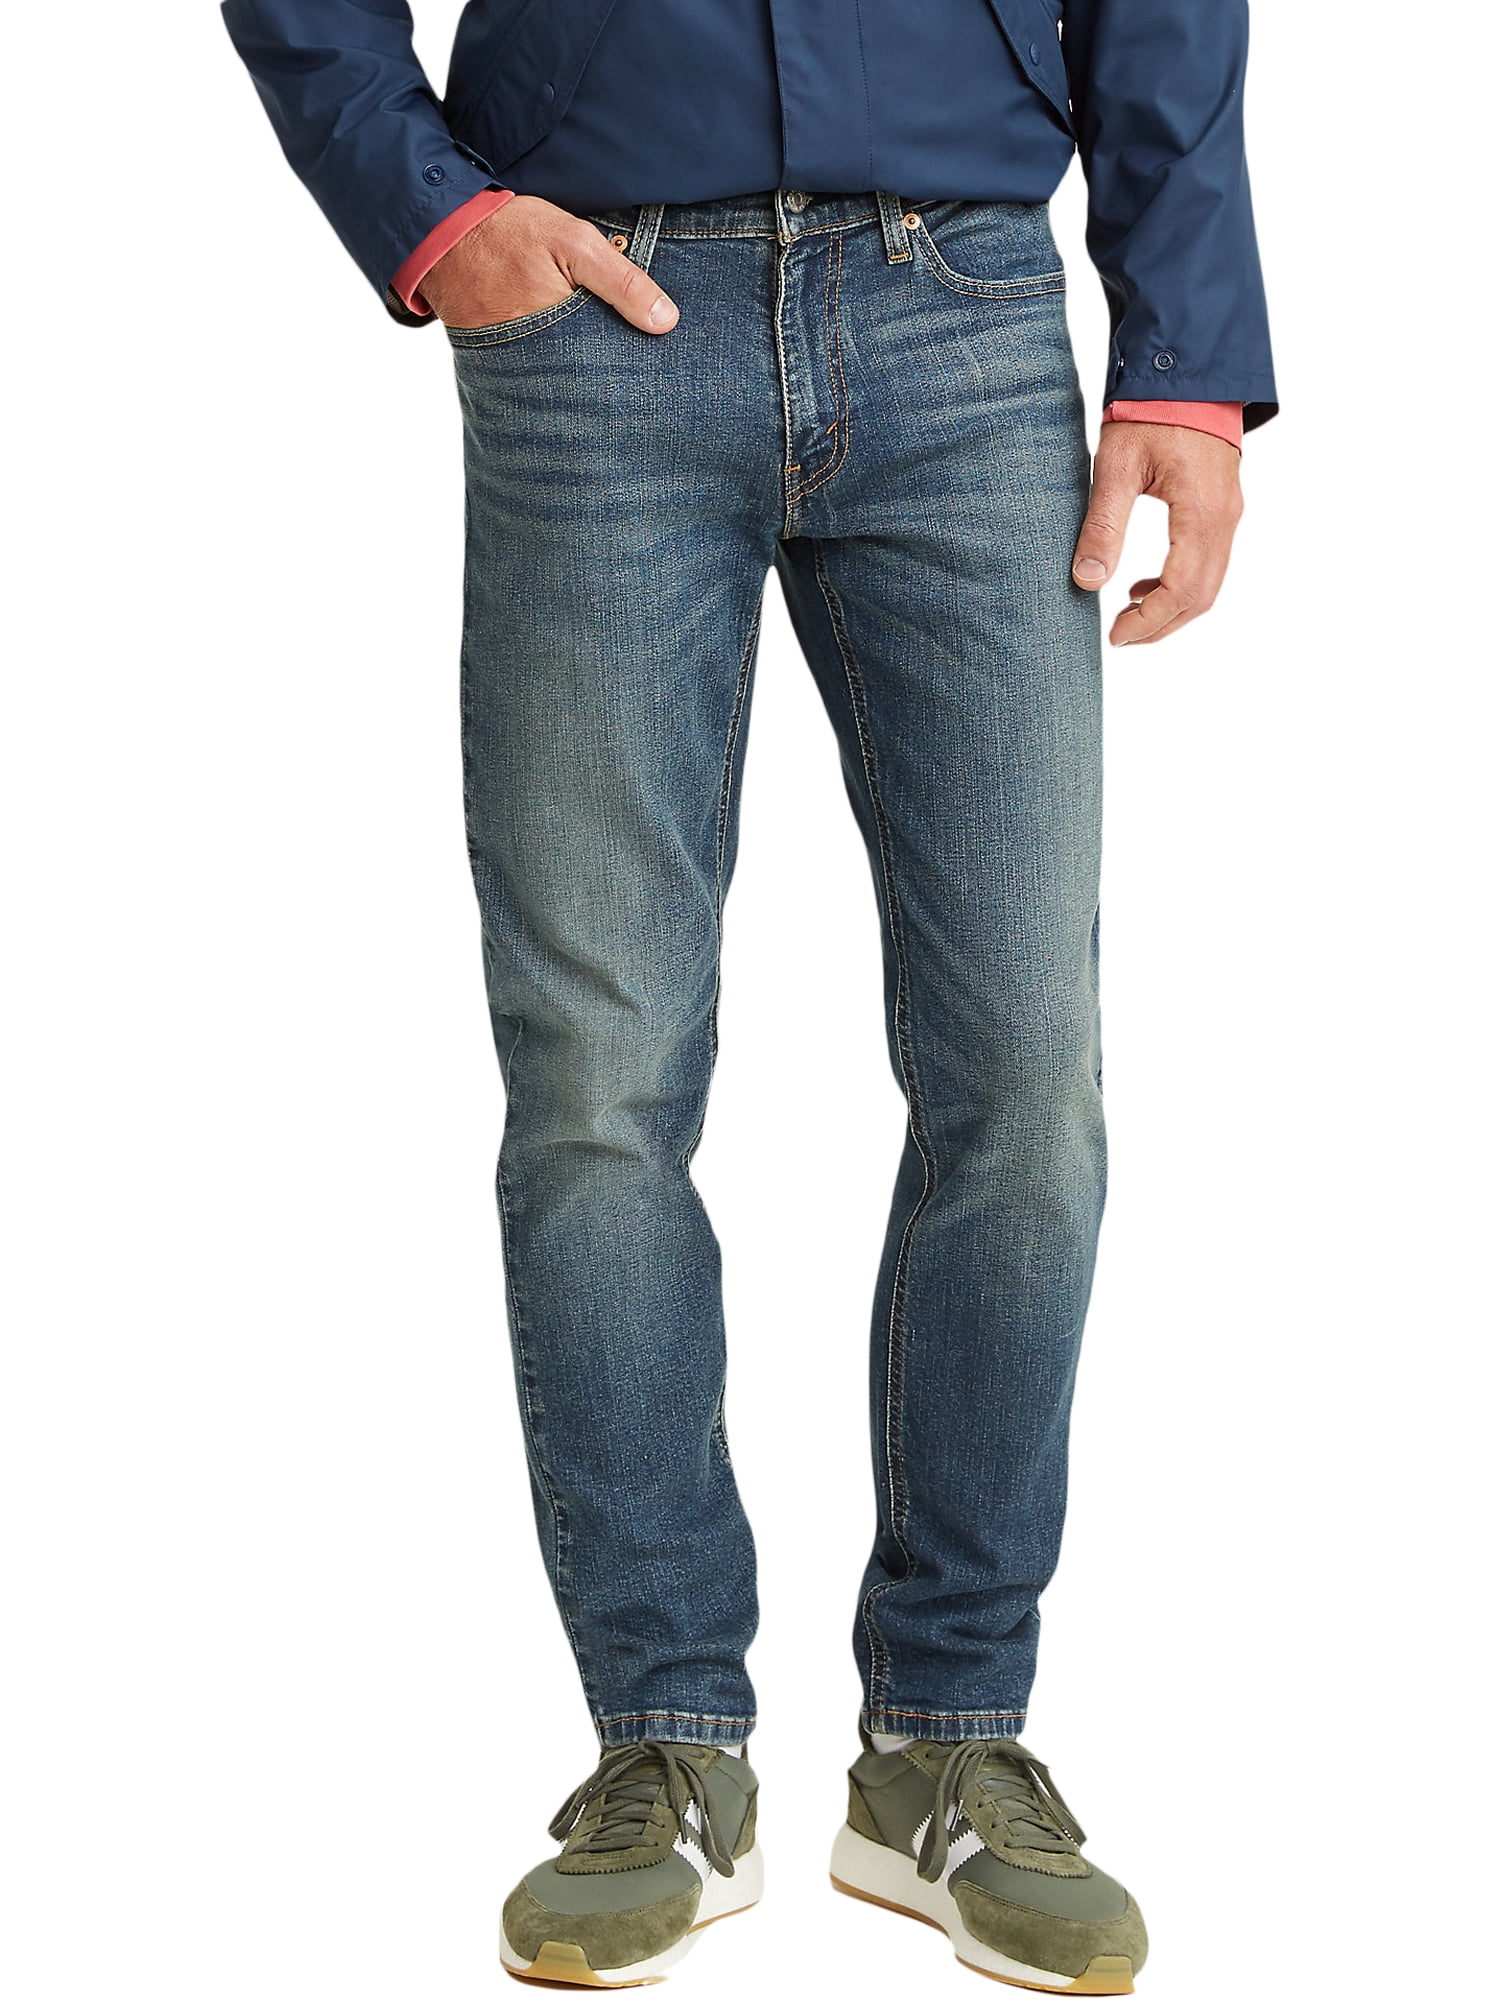 Mens Jeans Under 20 Dollars | lupon.gov.ph